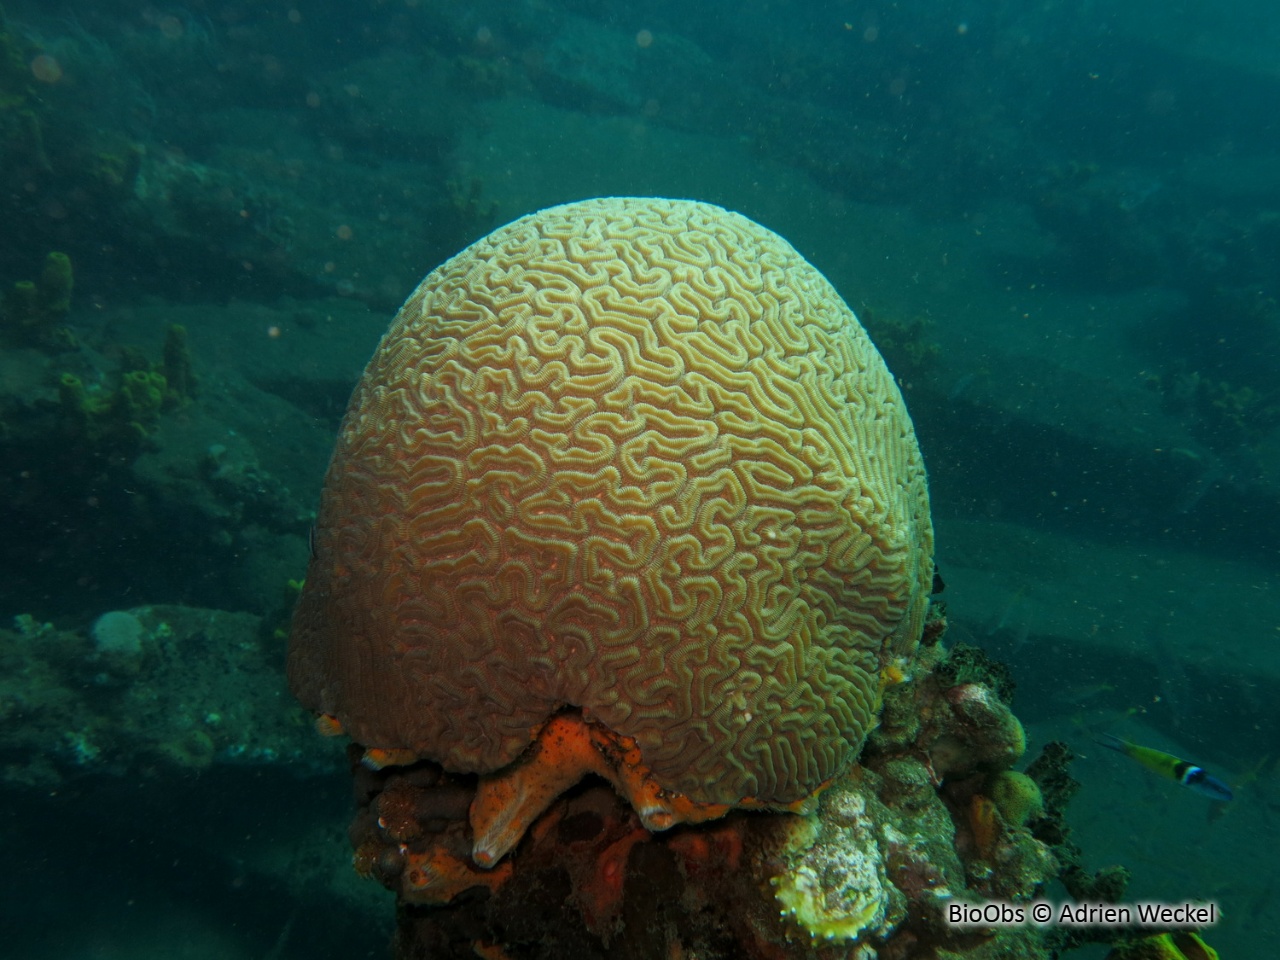 Corail-cerveau de Neptune - Diploria labyrinthiformis - Adrien Weckel - BioObs